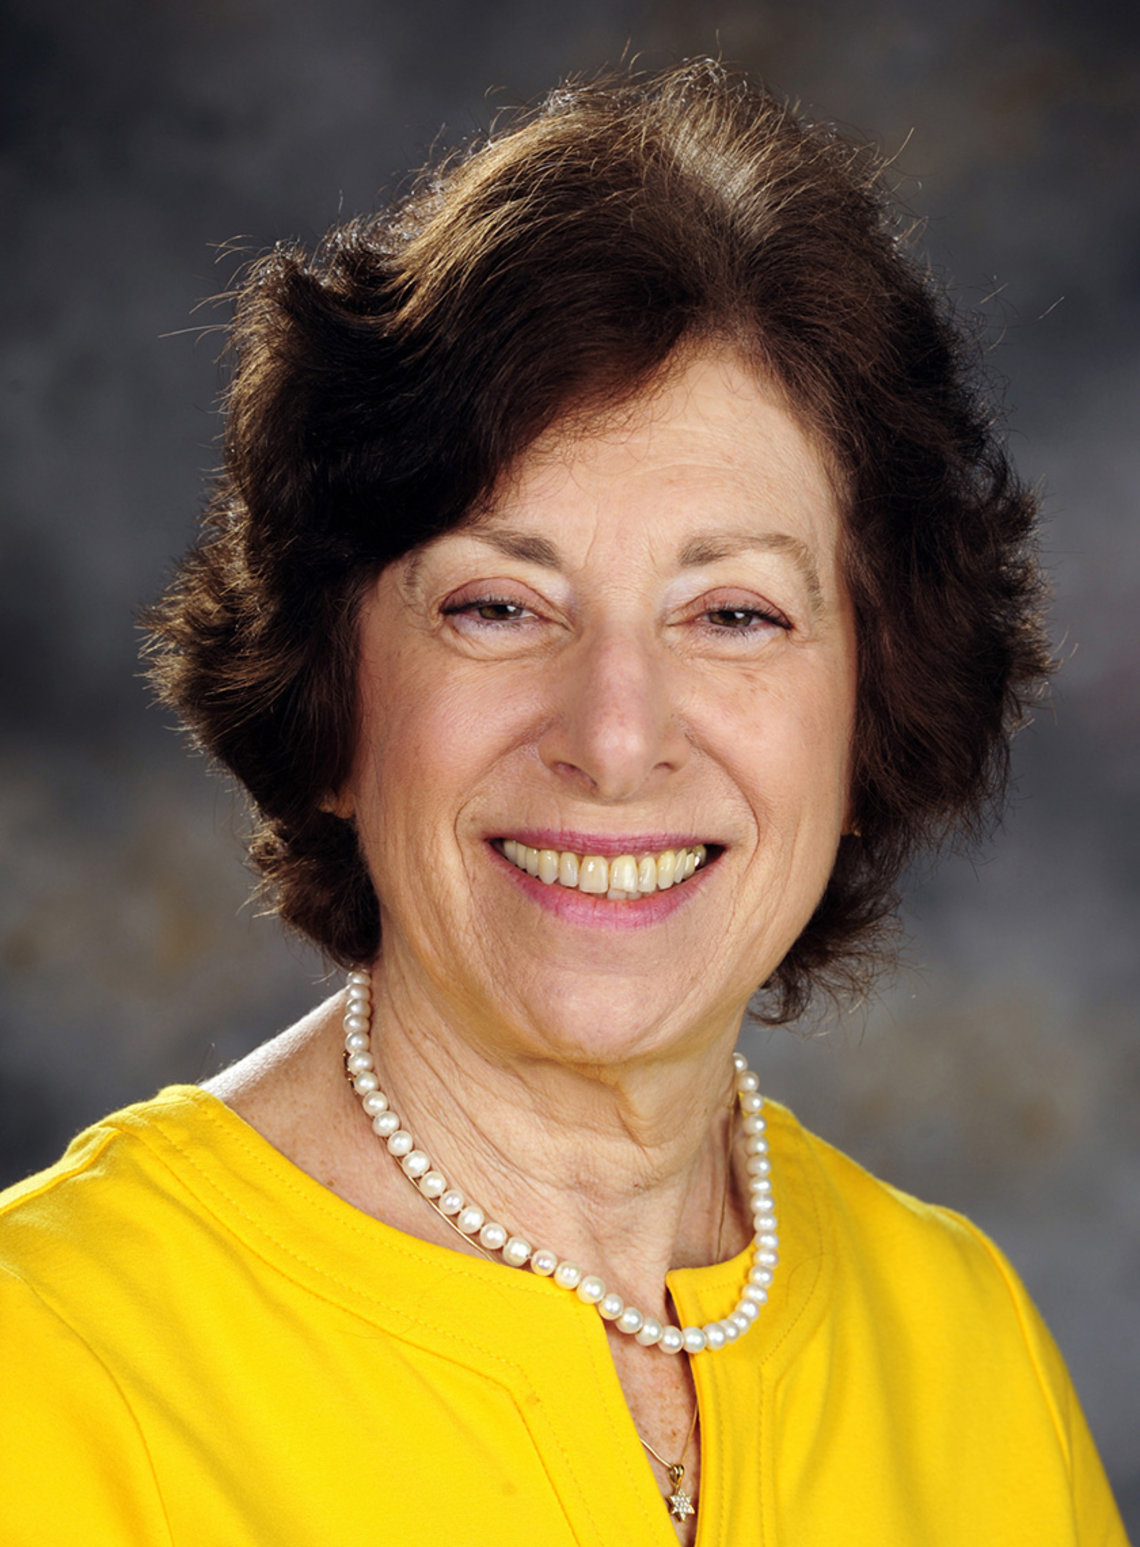 Dr. Linda Birnbaum